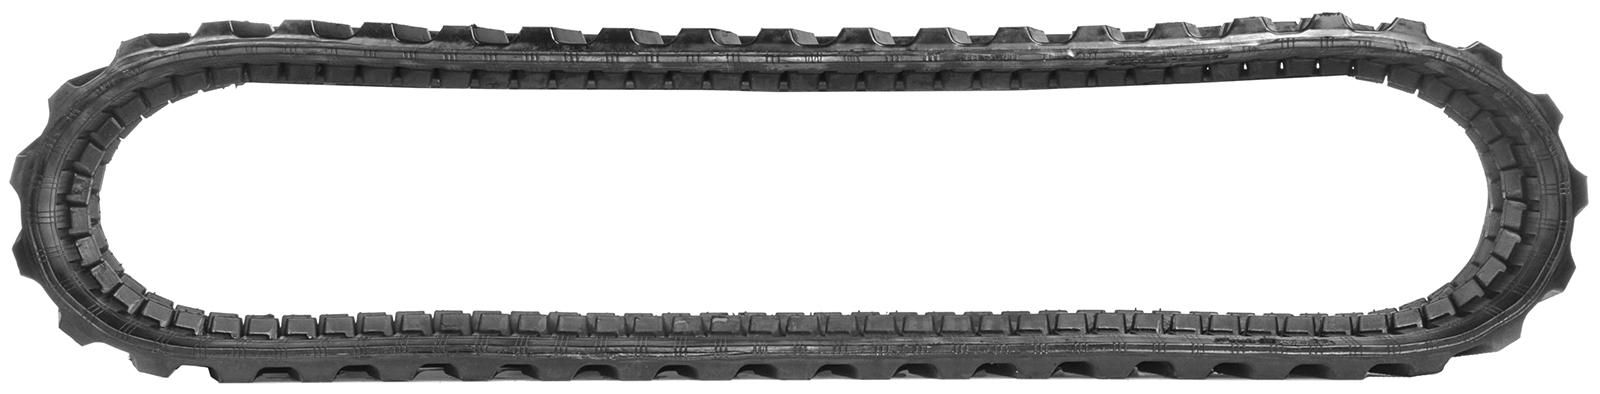 set of 2 14" heavy duty rubber track (350x52.5nx92)